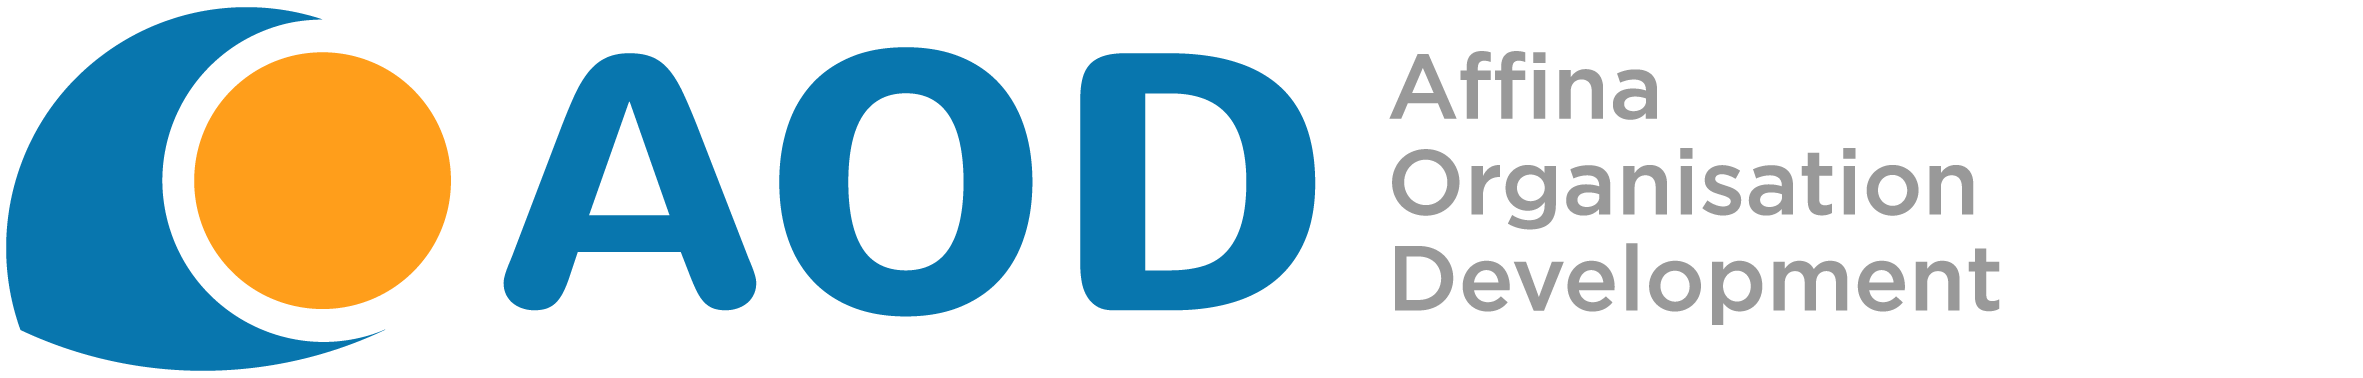 Affina Organisational Development logo